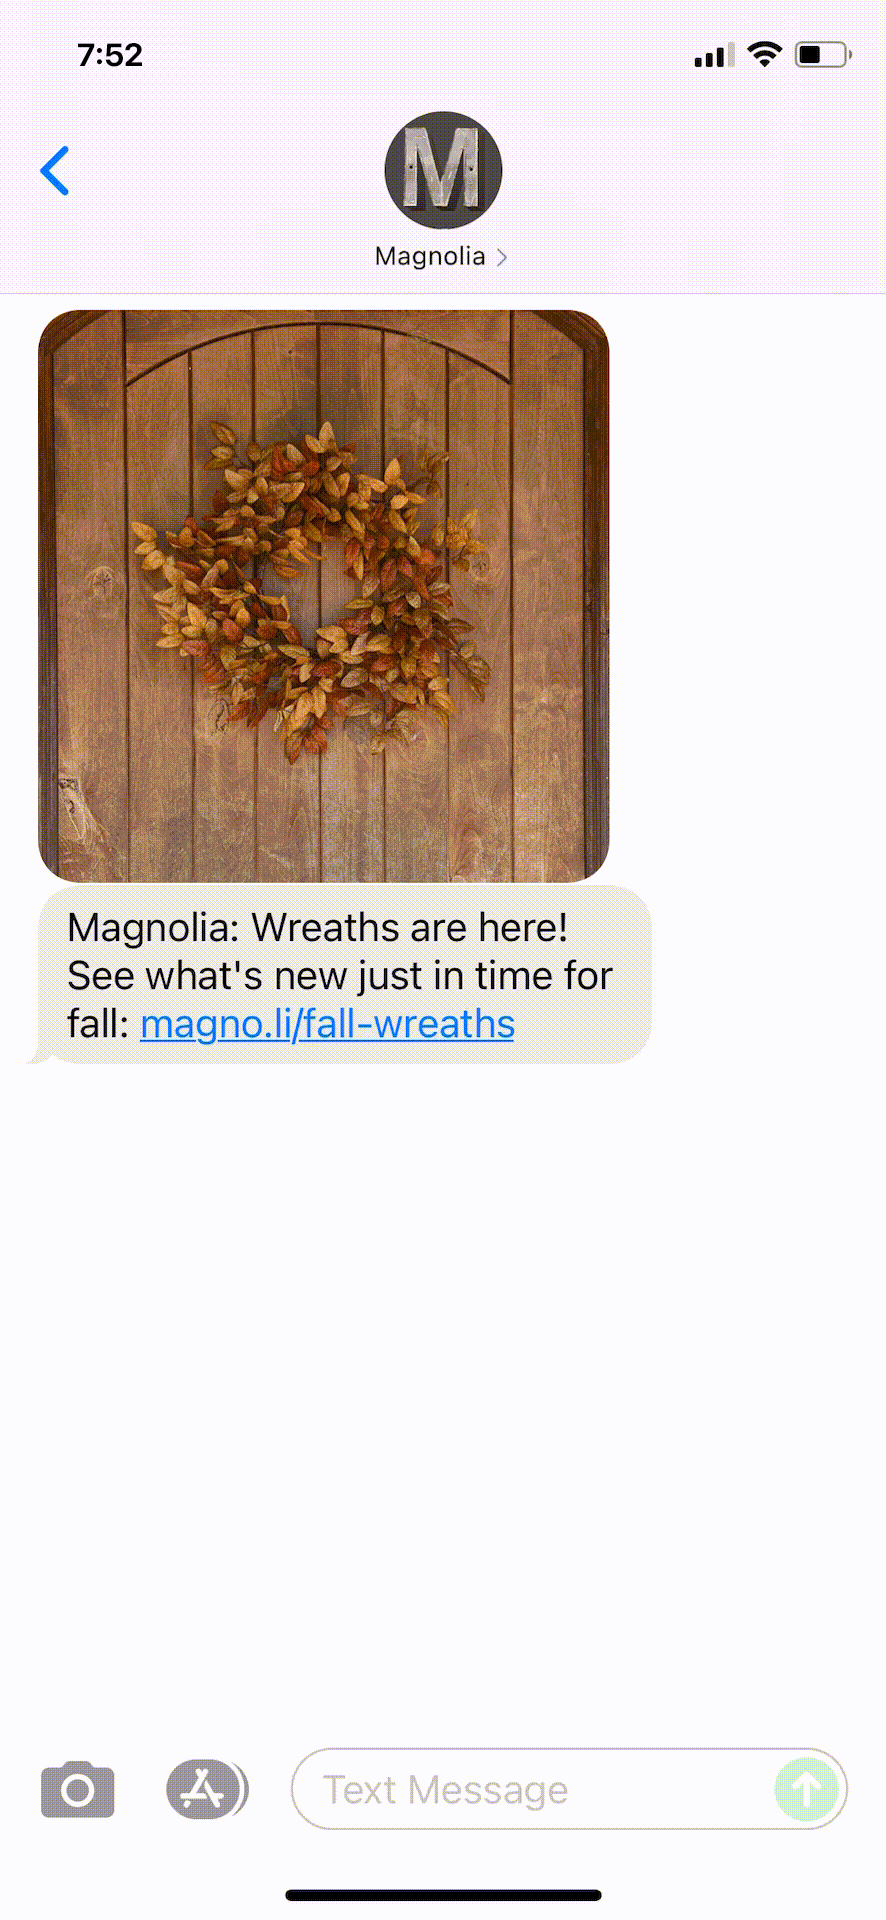 Magnolia-Text-Message-Marketing-Example-09.22.2021